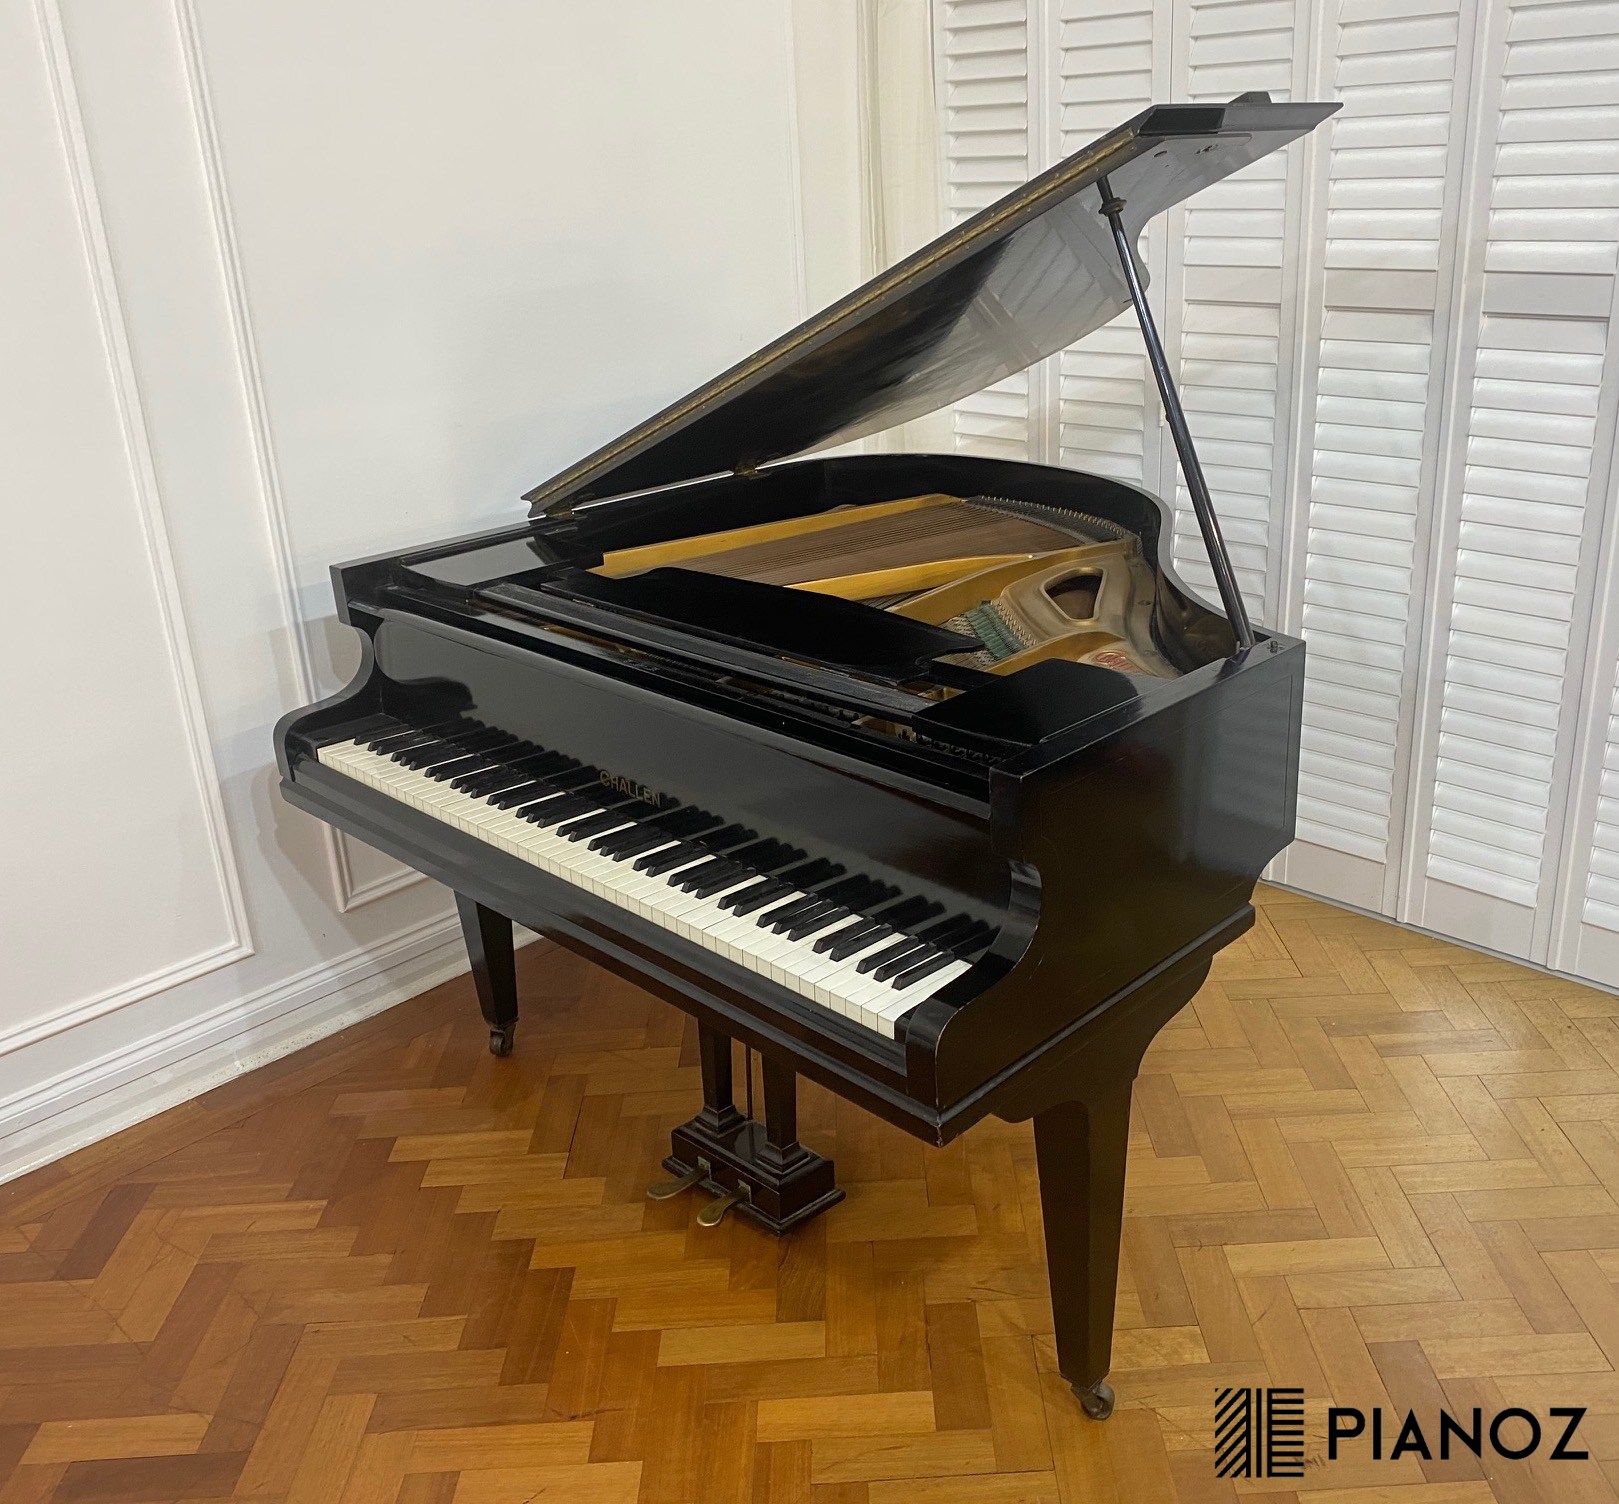 Challen Black Baby Grand Piano piano for sale in UK